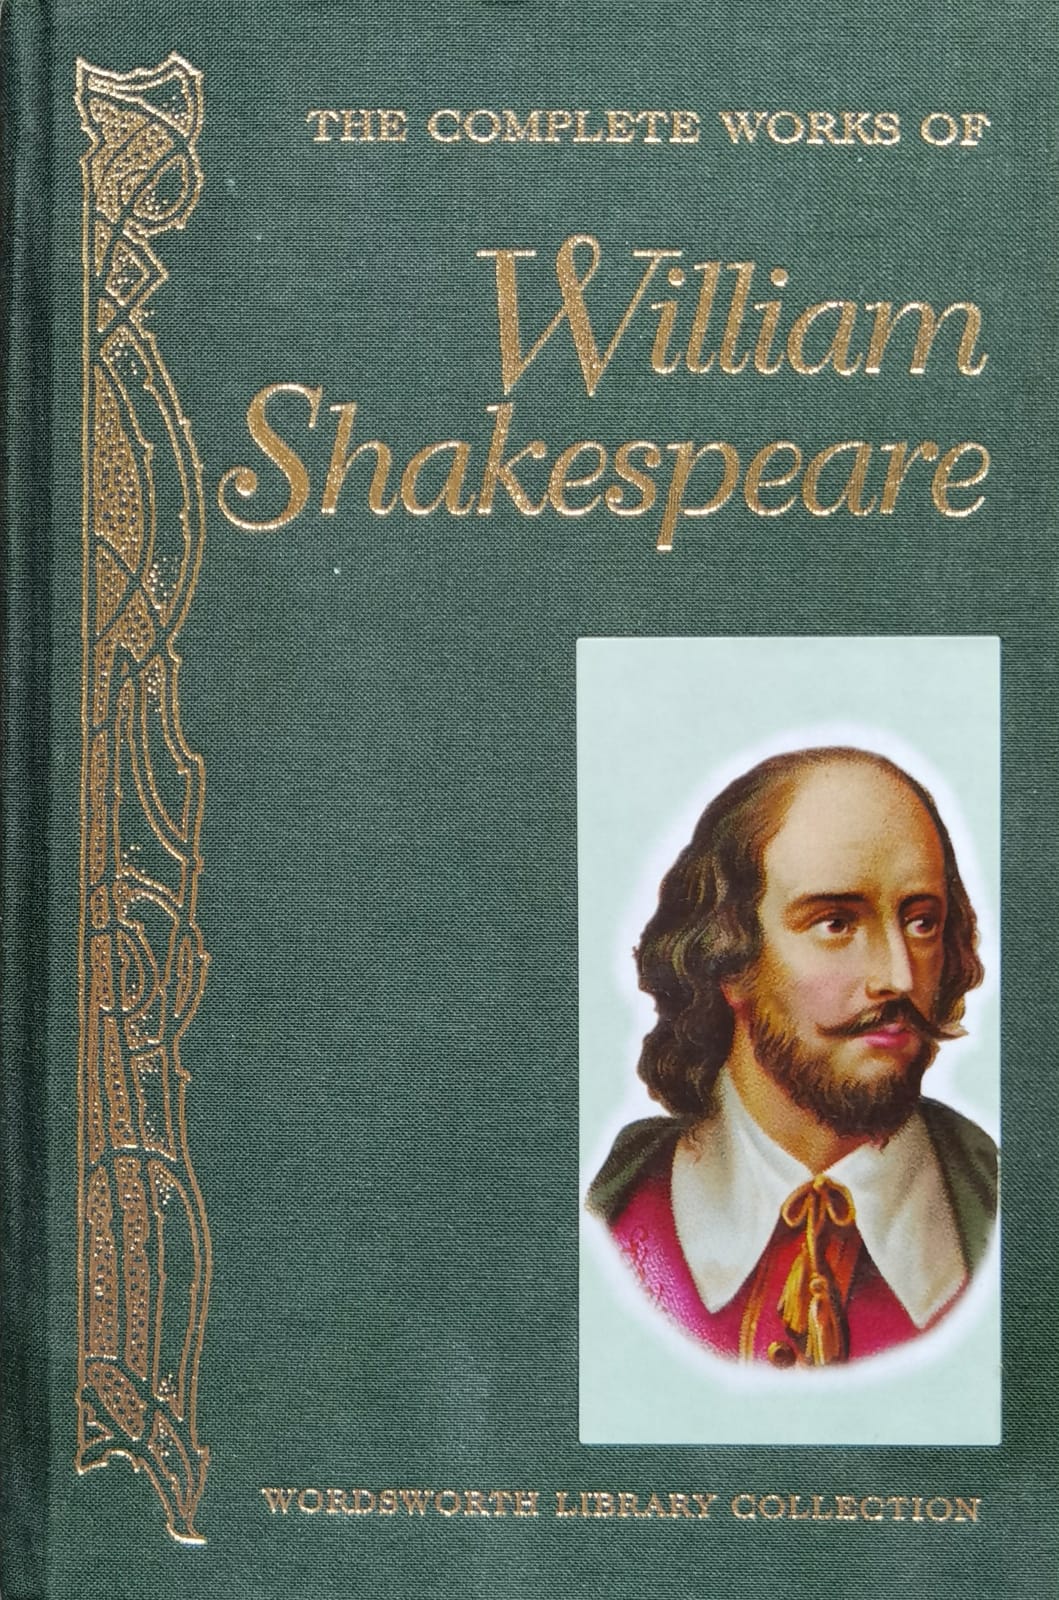 the complete works of william shakespeare (cartonata)                                                william shakespeare                                                                                 